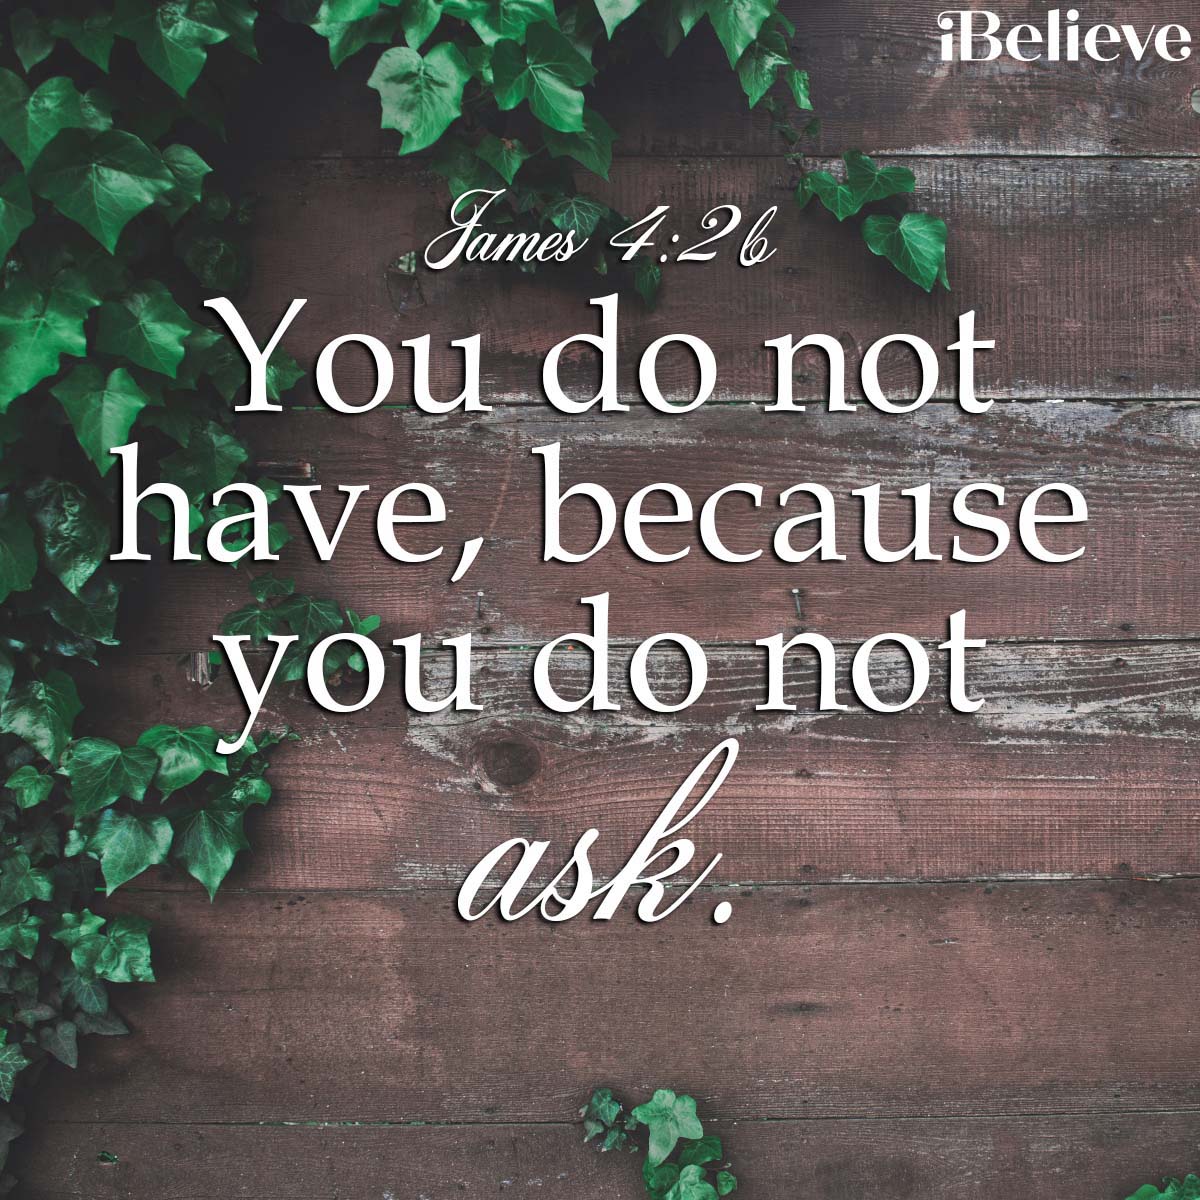 James 4:2, inspirational image